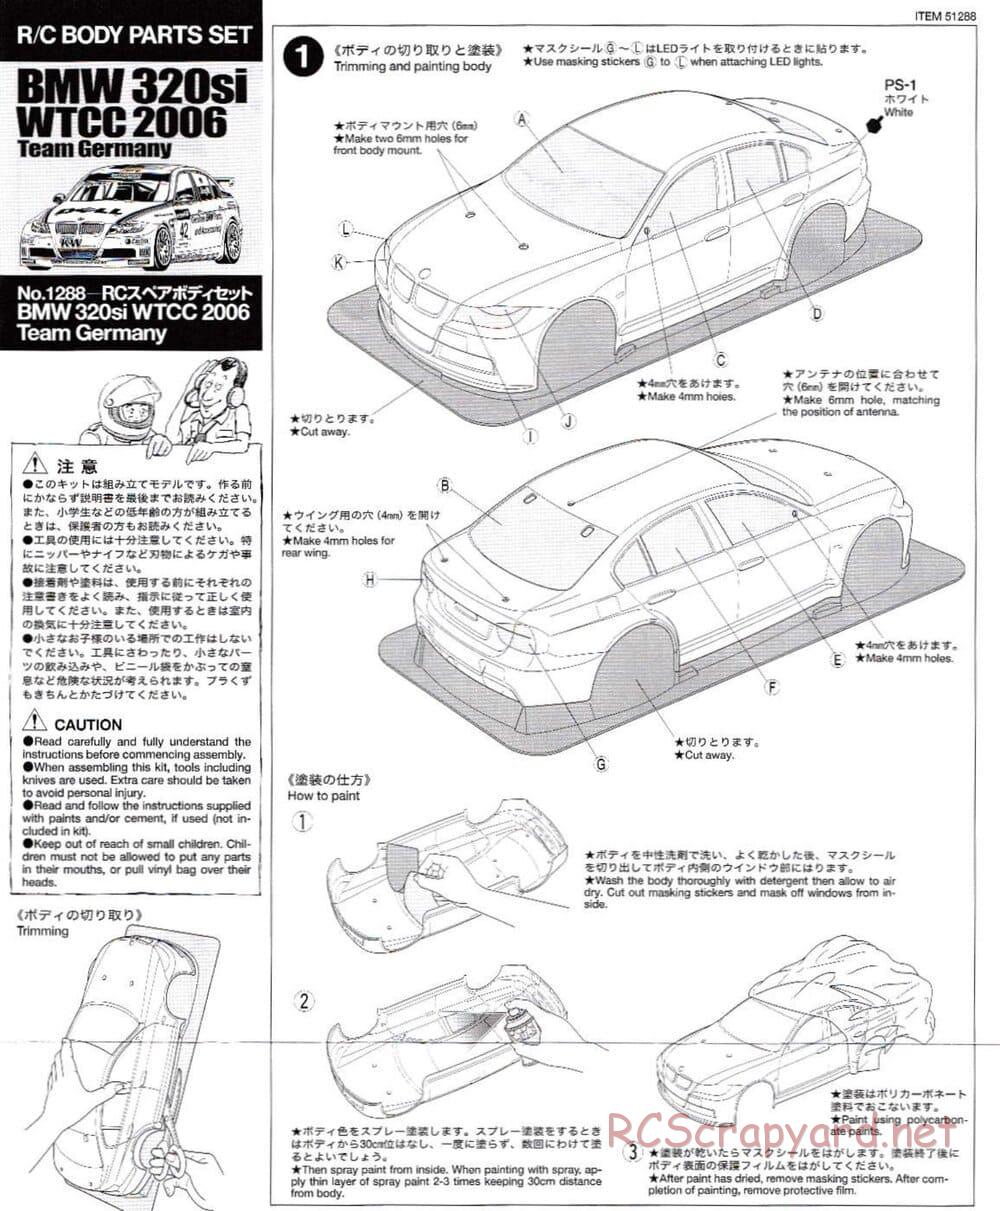 Tamiya - BMW 320si WTCC 2006 - TT-01 Chassis - Body Manual - Page 1